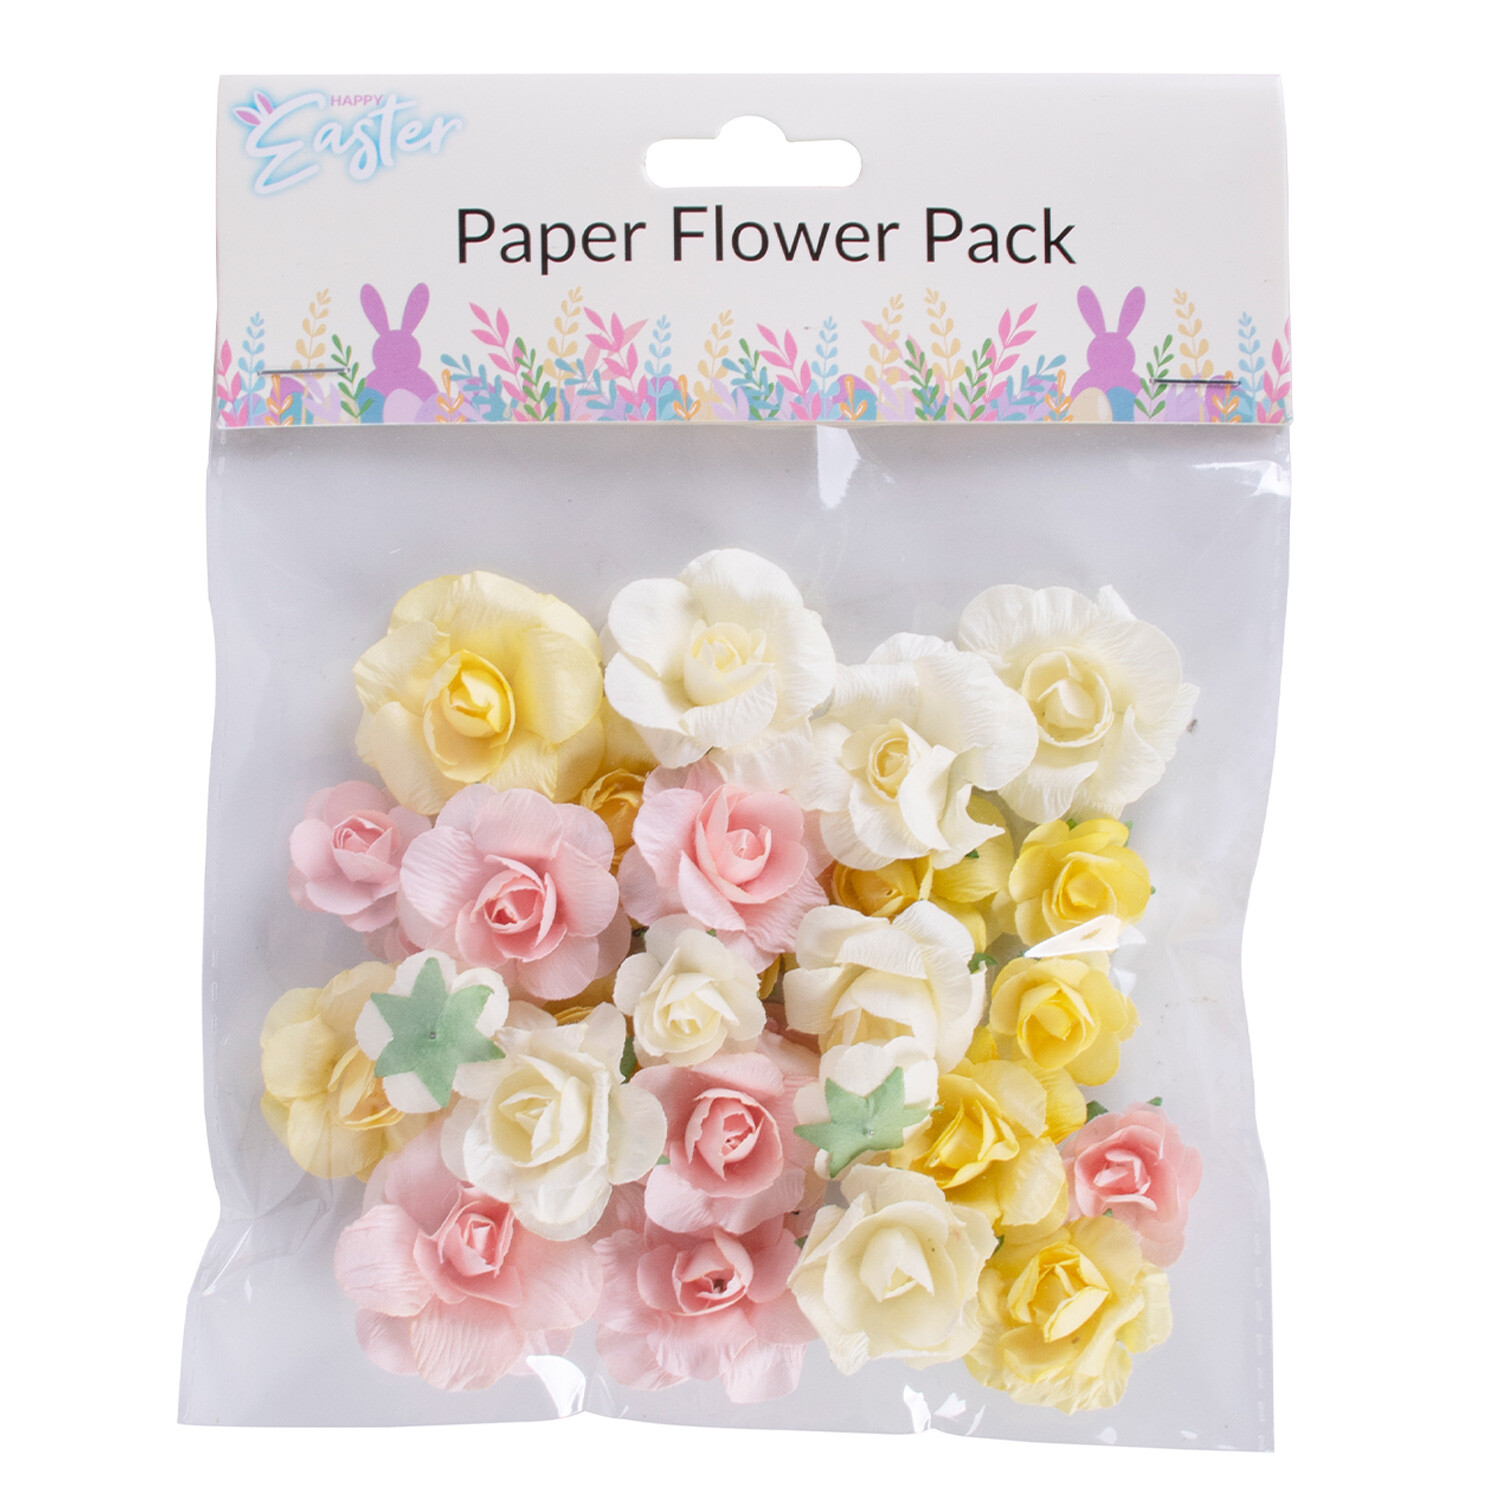 Paper Flower Pack Image